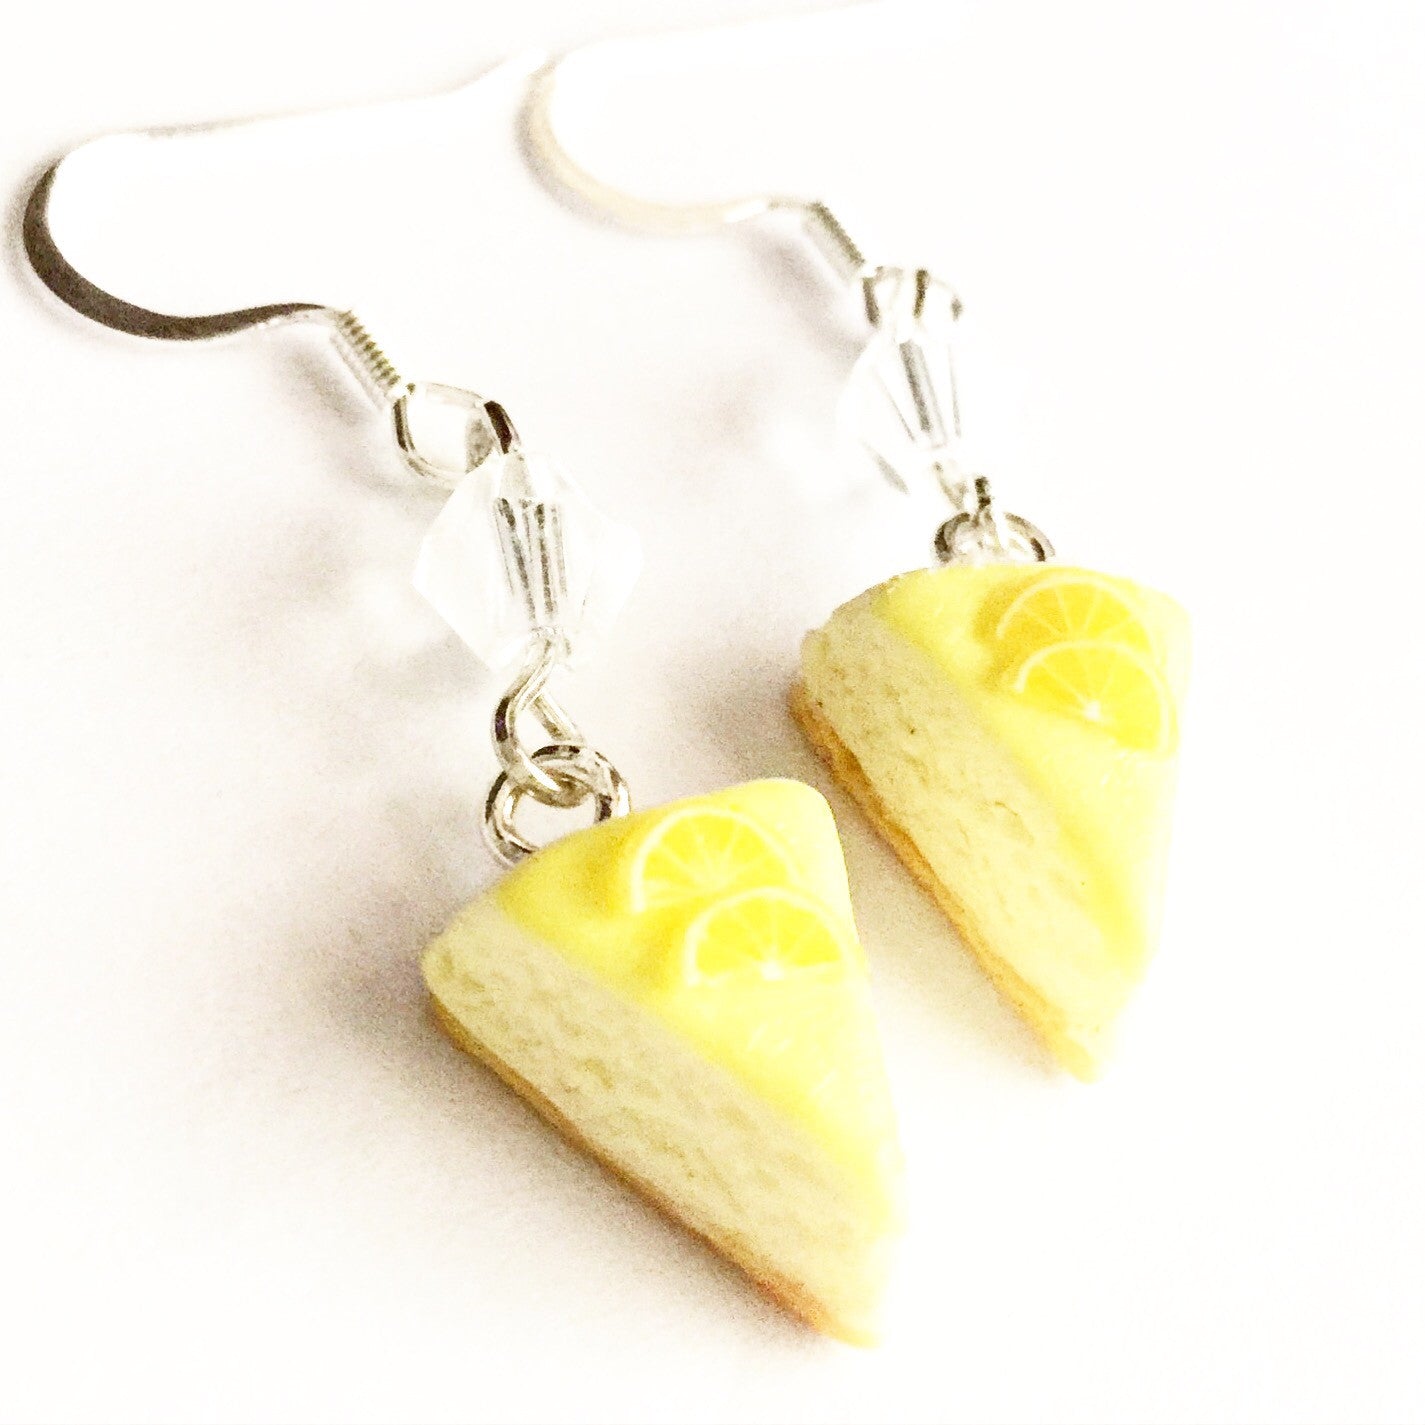 Lemon Cheesecake Dangle Earrings - Jillicious charms and accessories